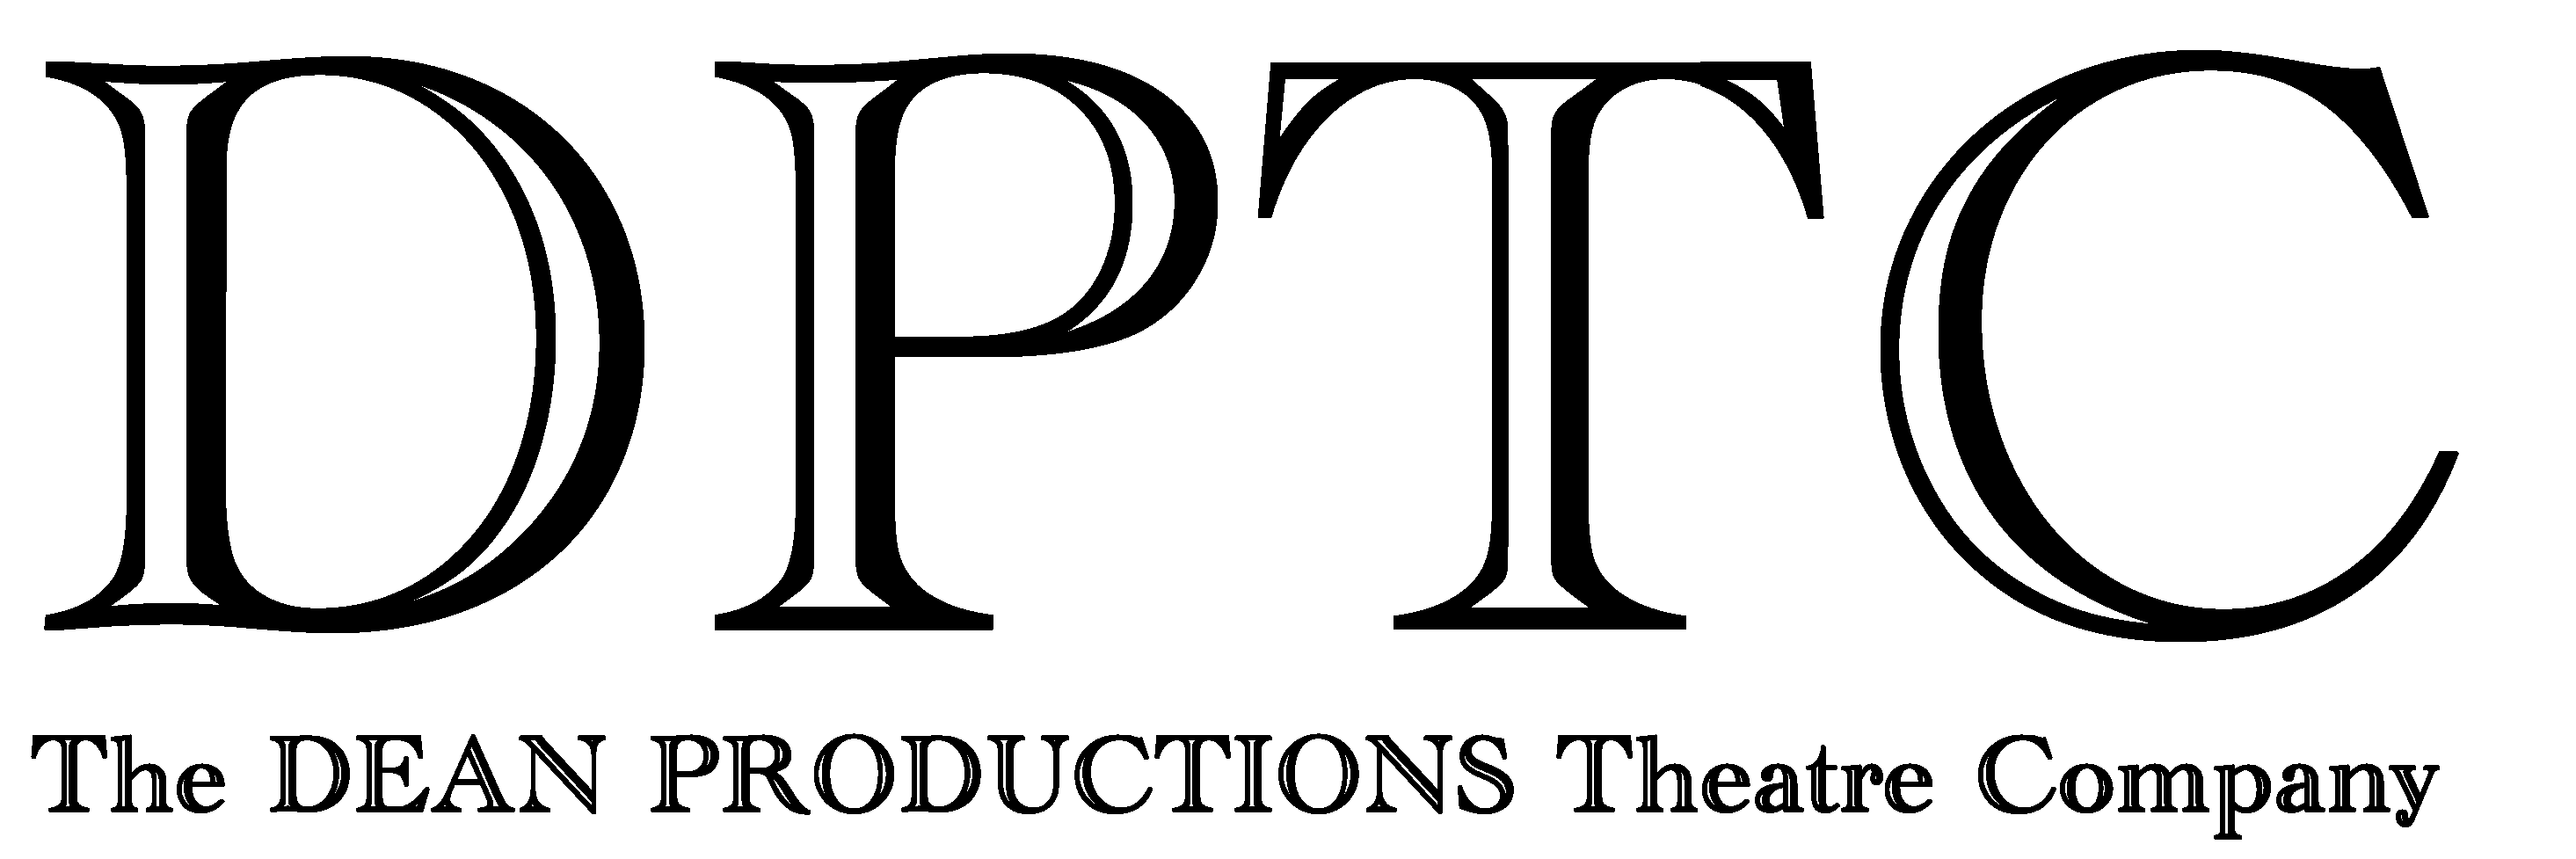 Dean Productions Theatre Company